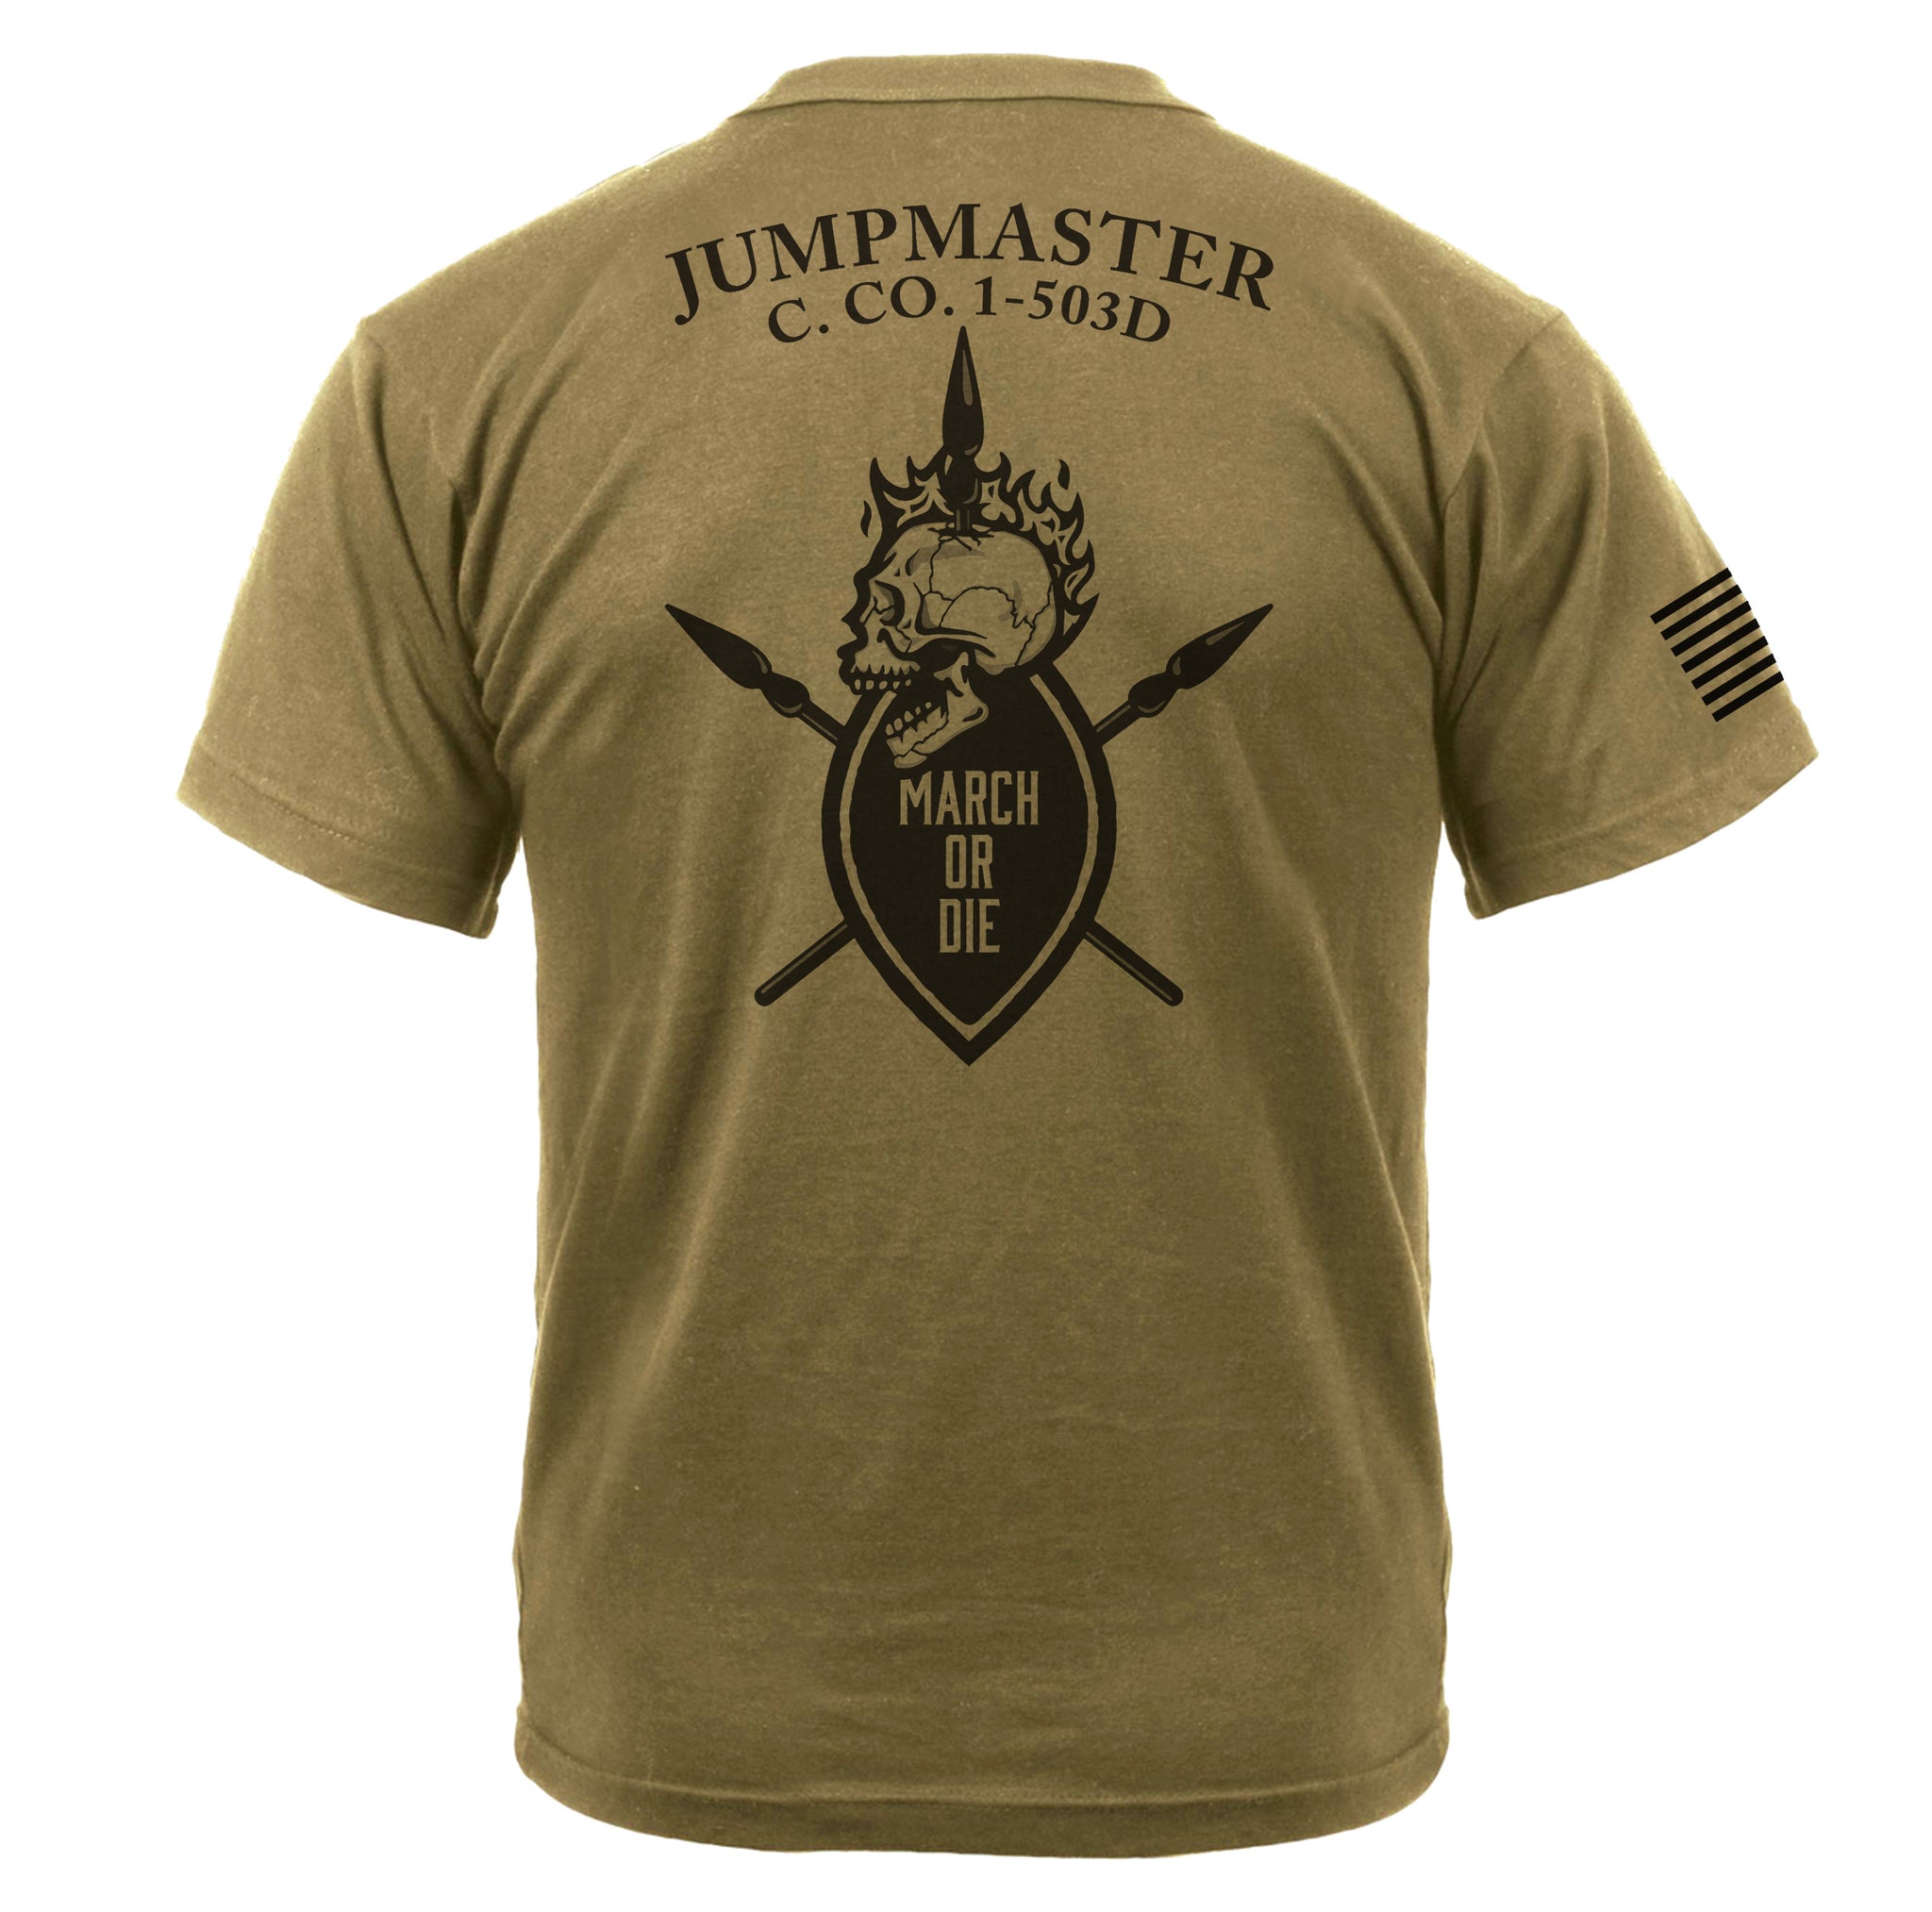 C Co 1-503rd Jumpmaster Uniform Shirt